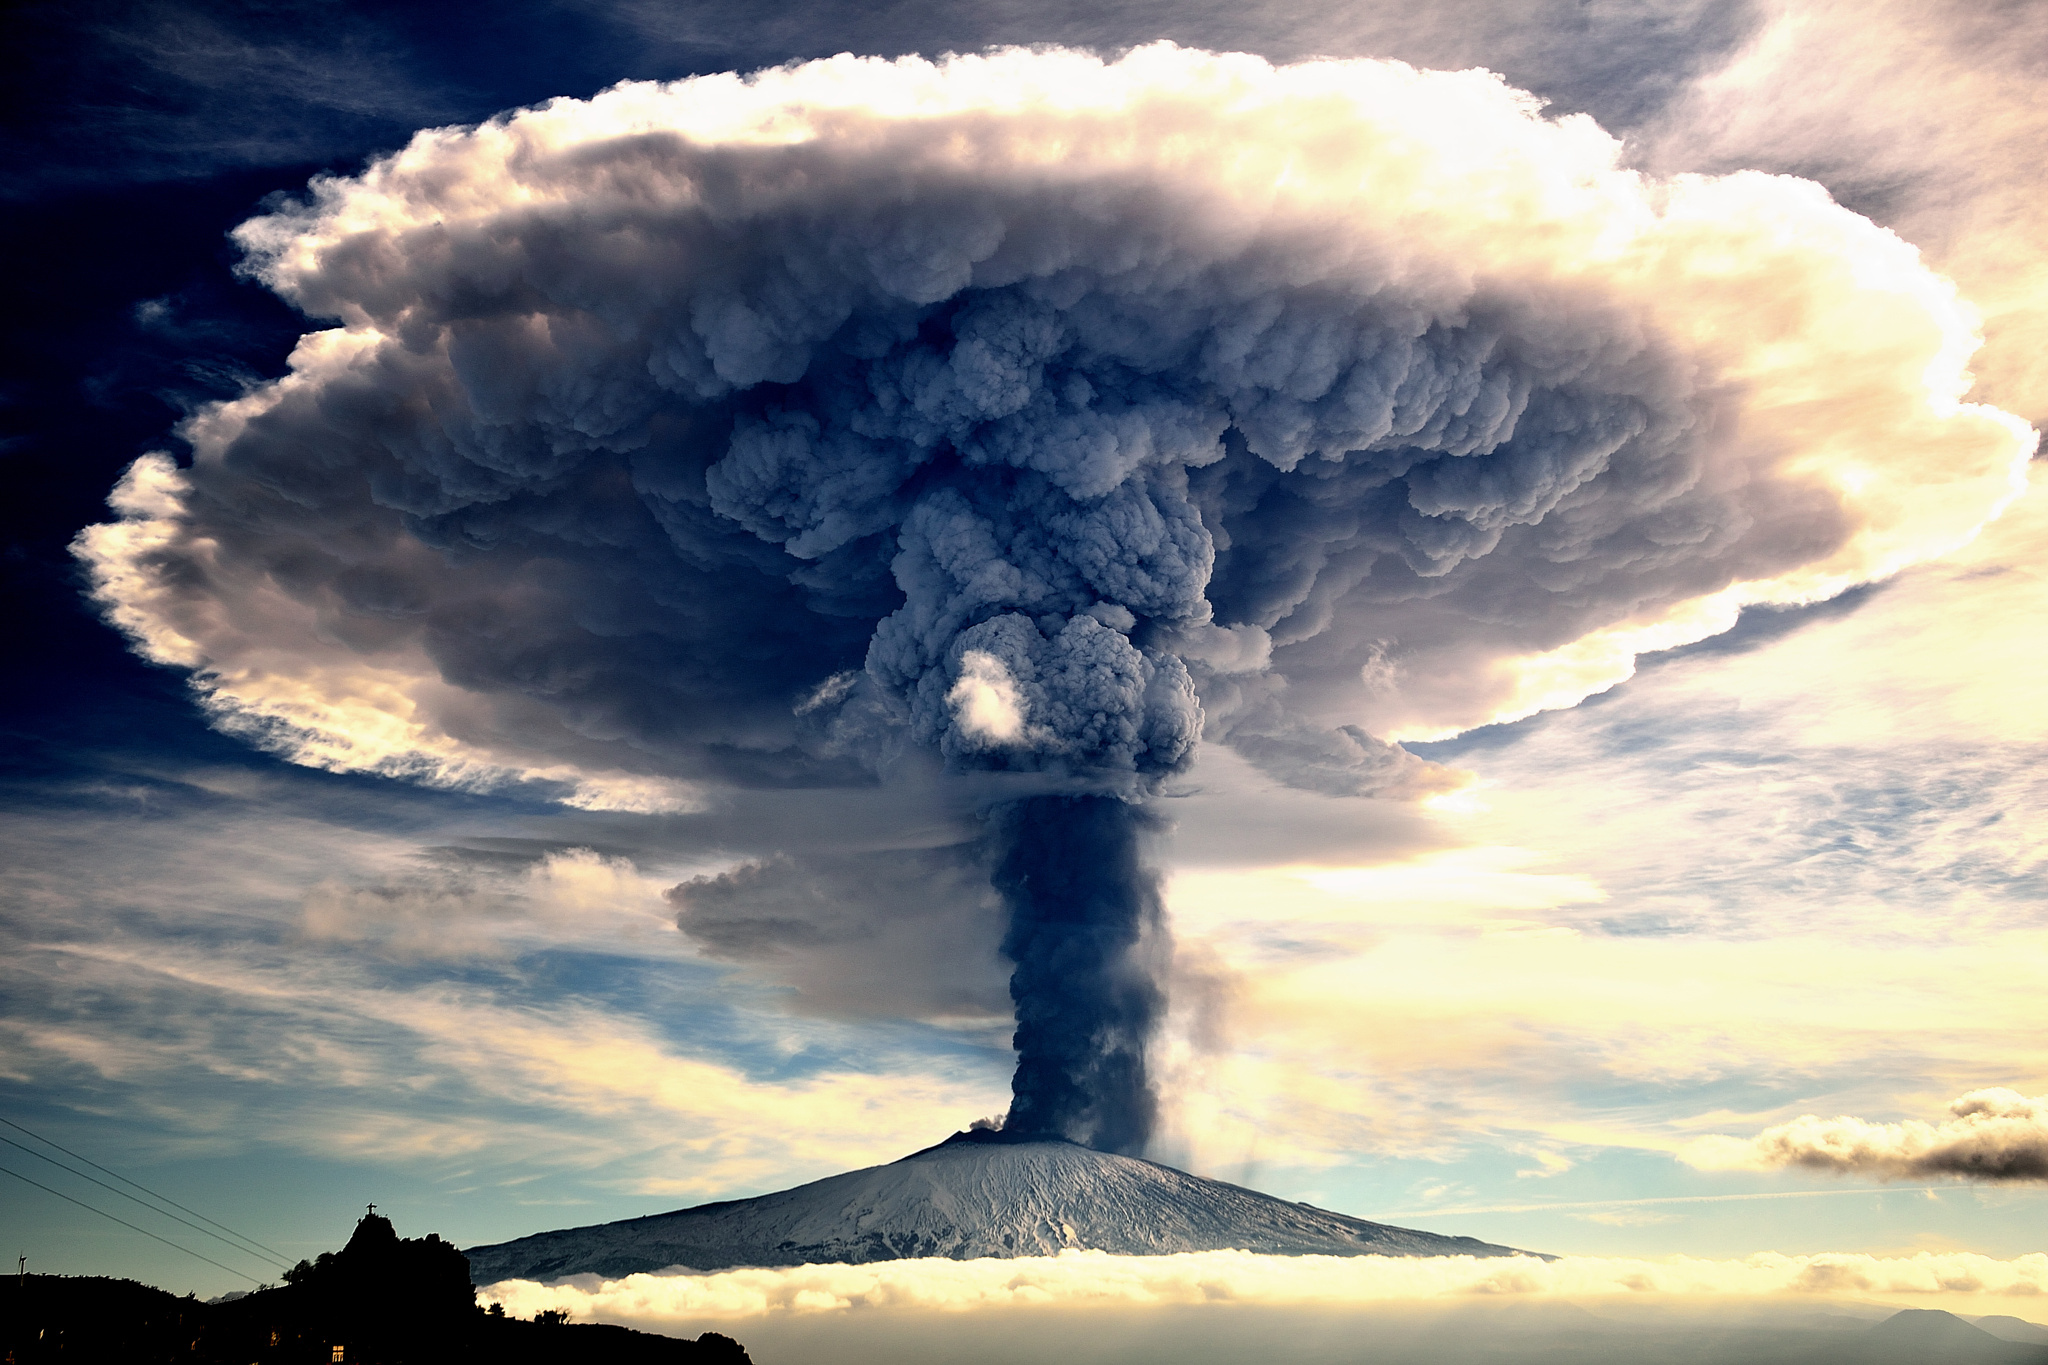 General 2048x1365 volcano lava eruption nature Mount Etna Italy Sicily smoke clouds landscape mushroom clouds 500px Giuseppe Mario Famiani